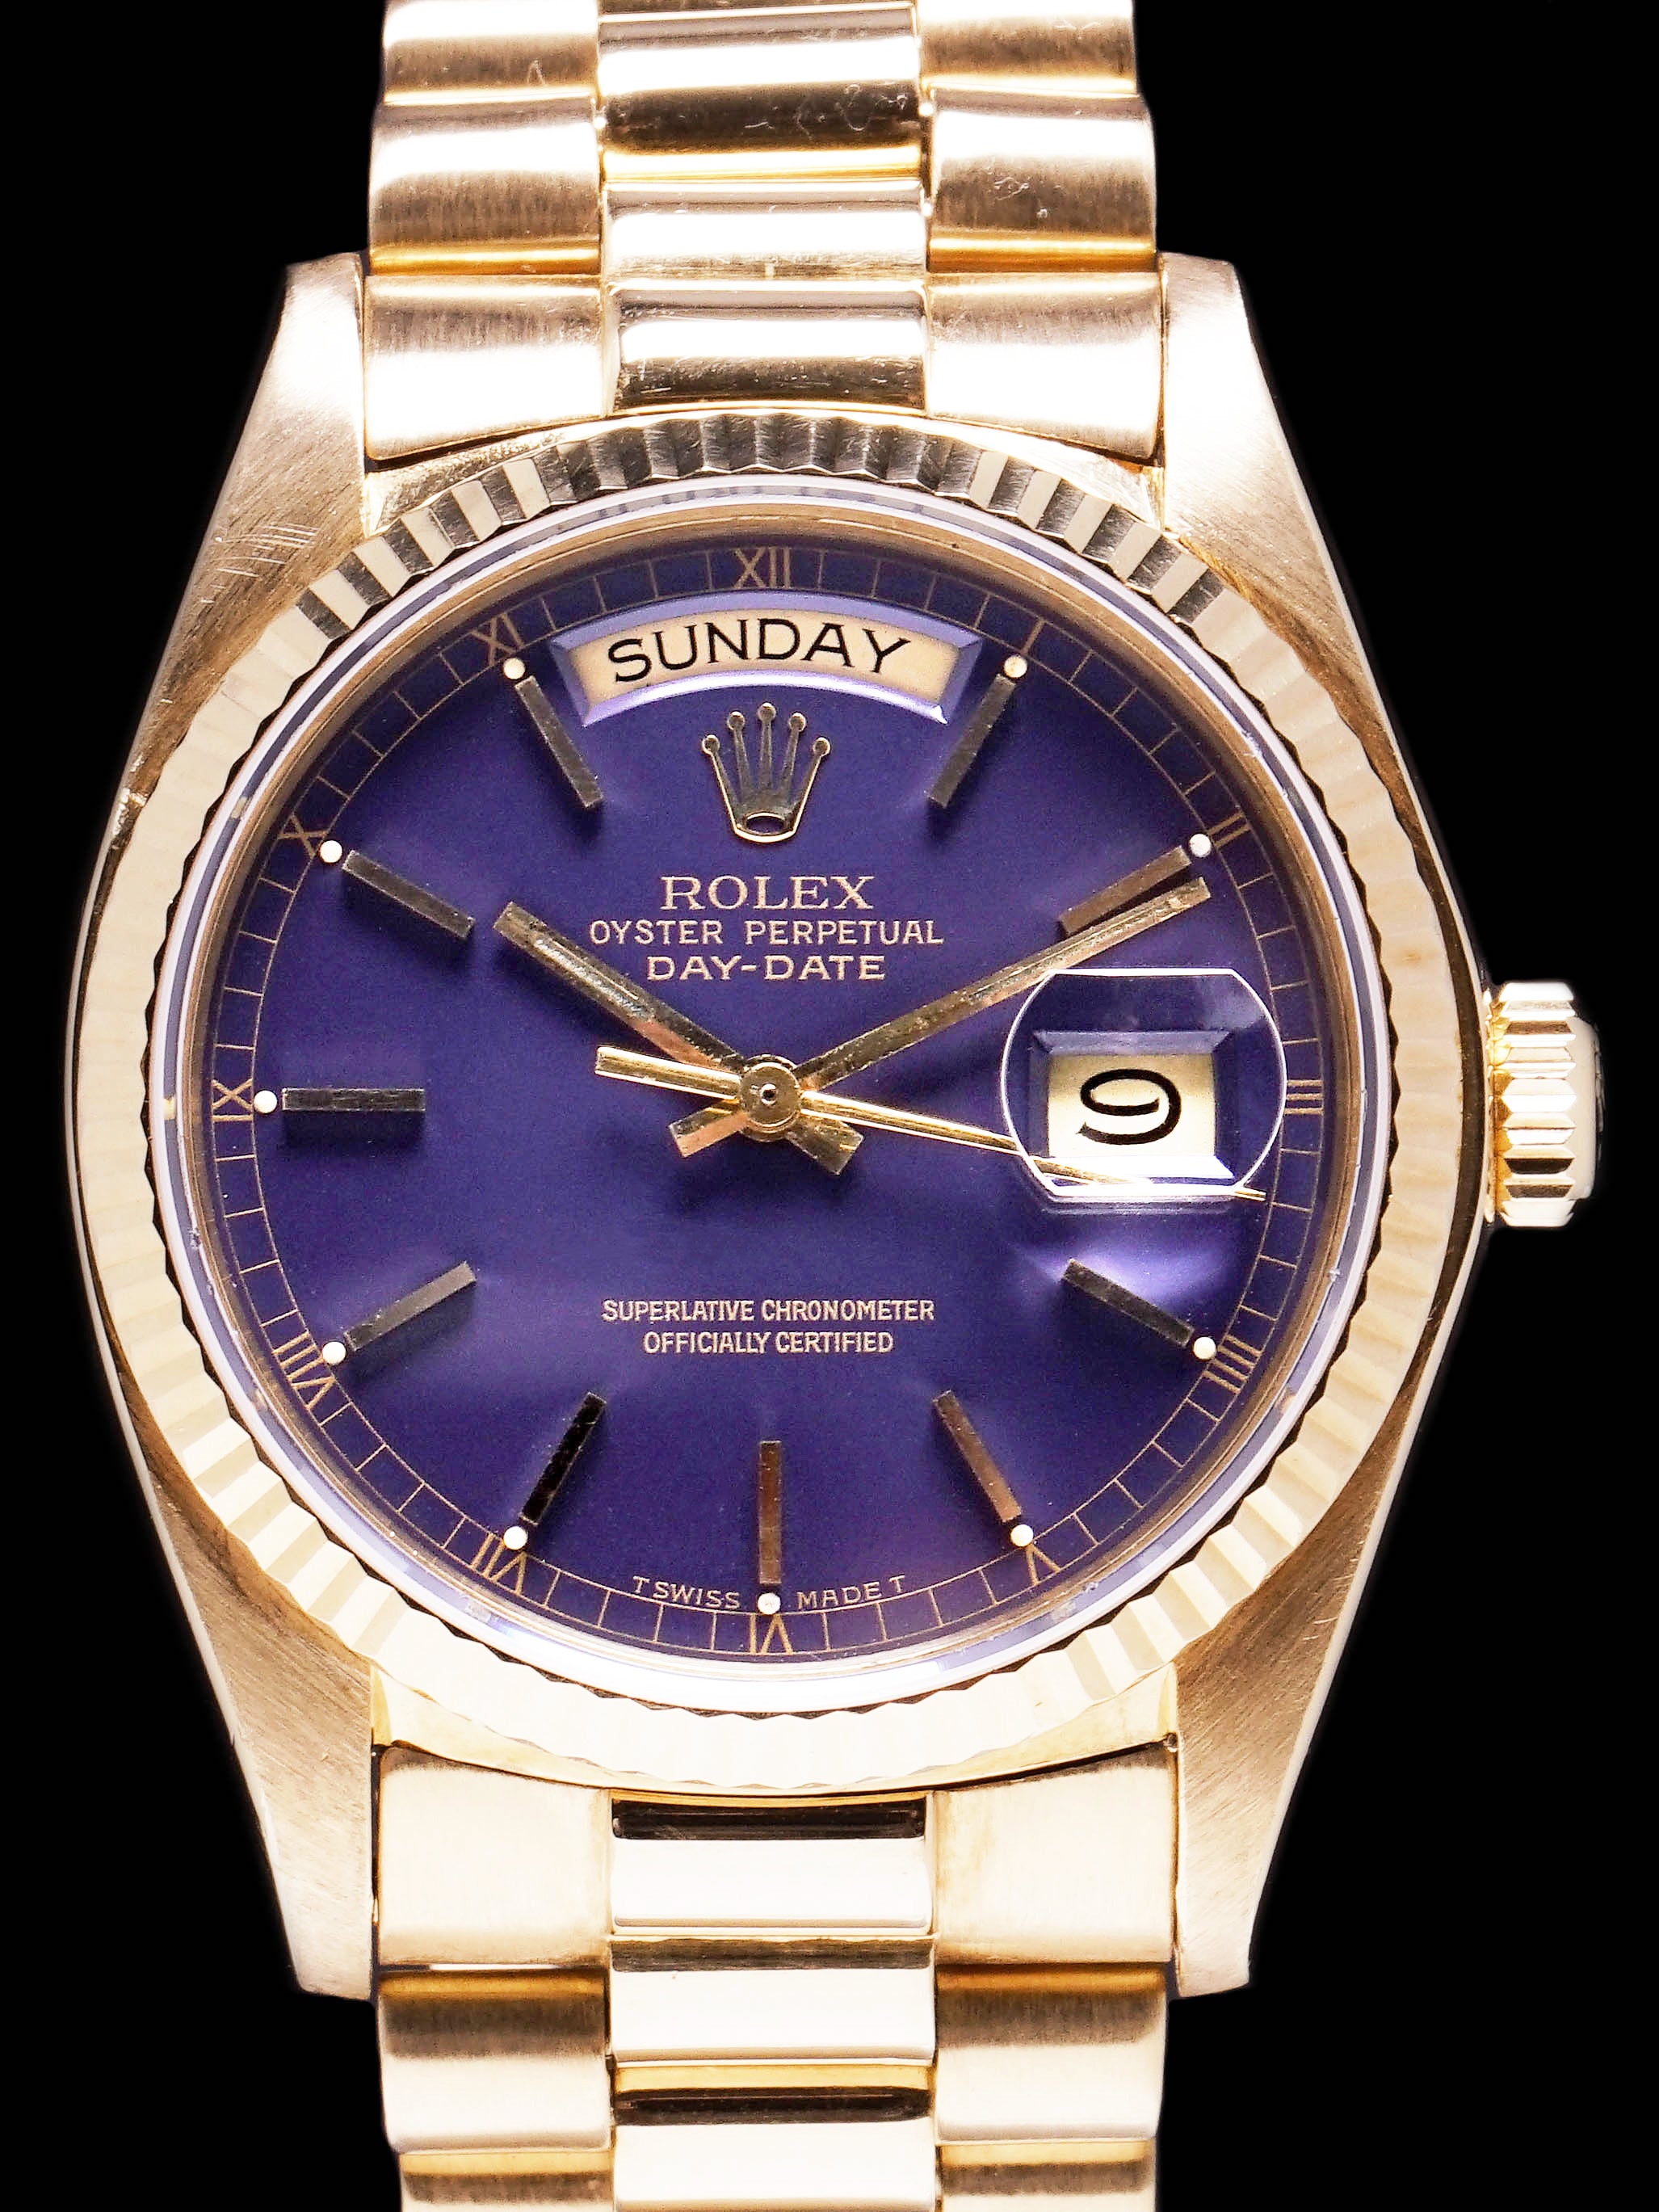 1979 Rolex Day-Date (Ref. 18038) "Purple Dial" AKA "The Grape"